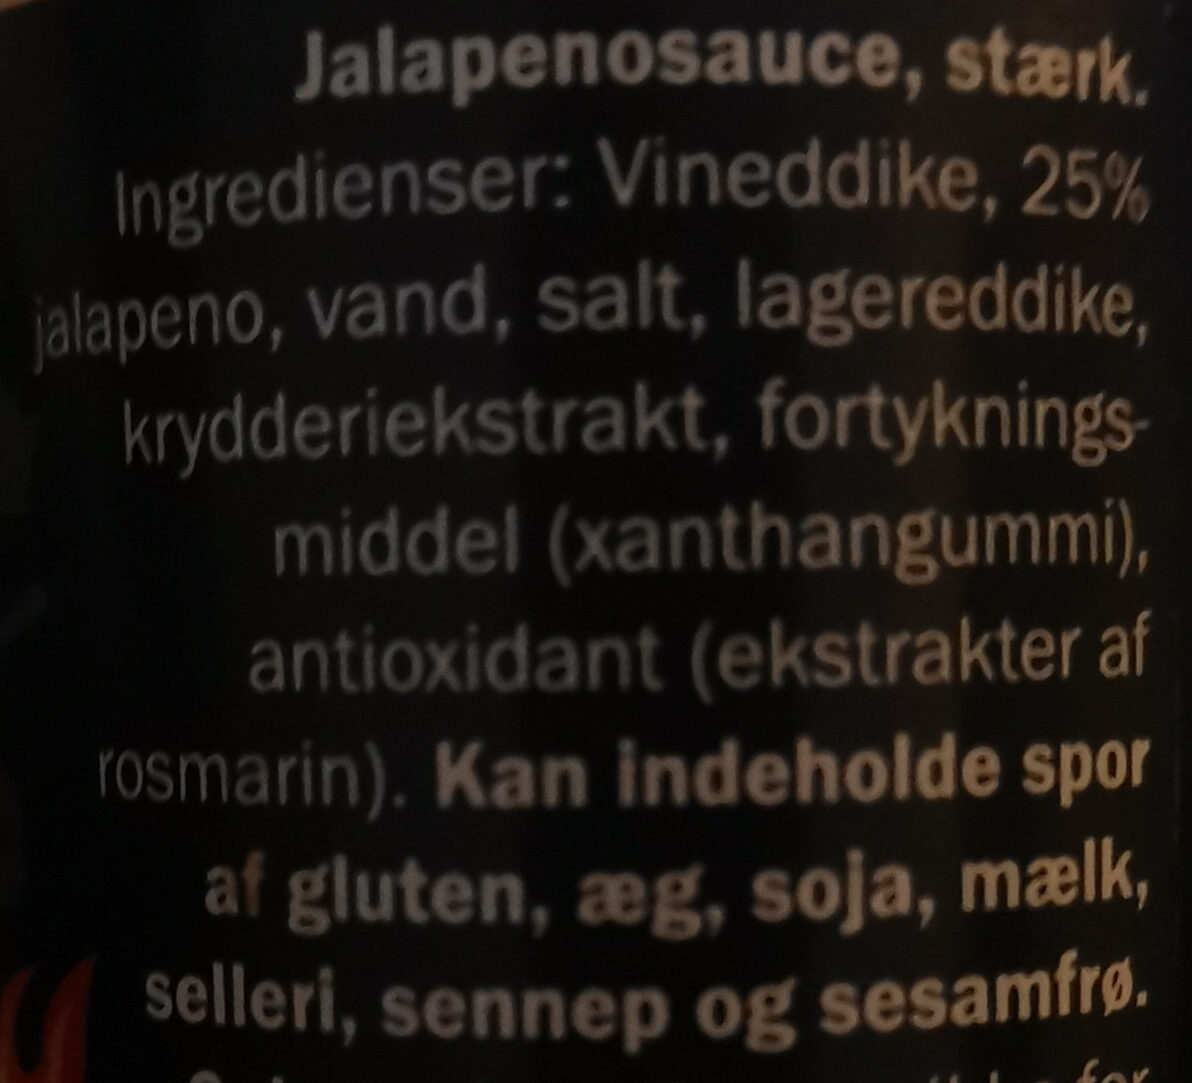 Salsa piccante con jalapenos - Ingredienser